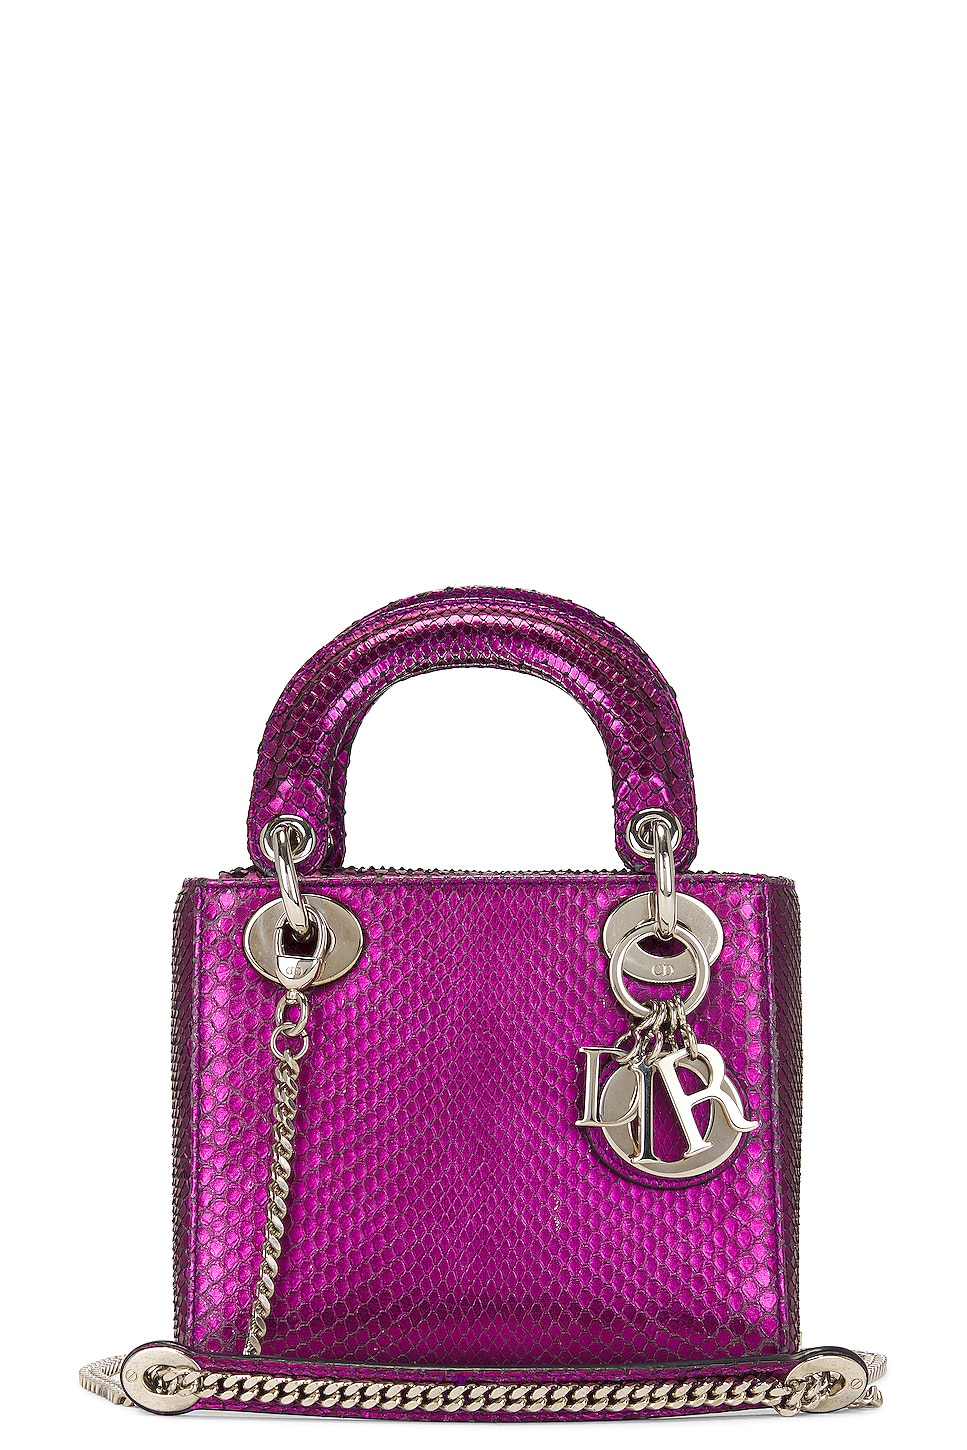 Python Mini Lady Handbag in Purple